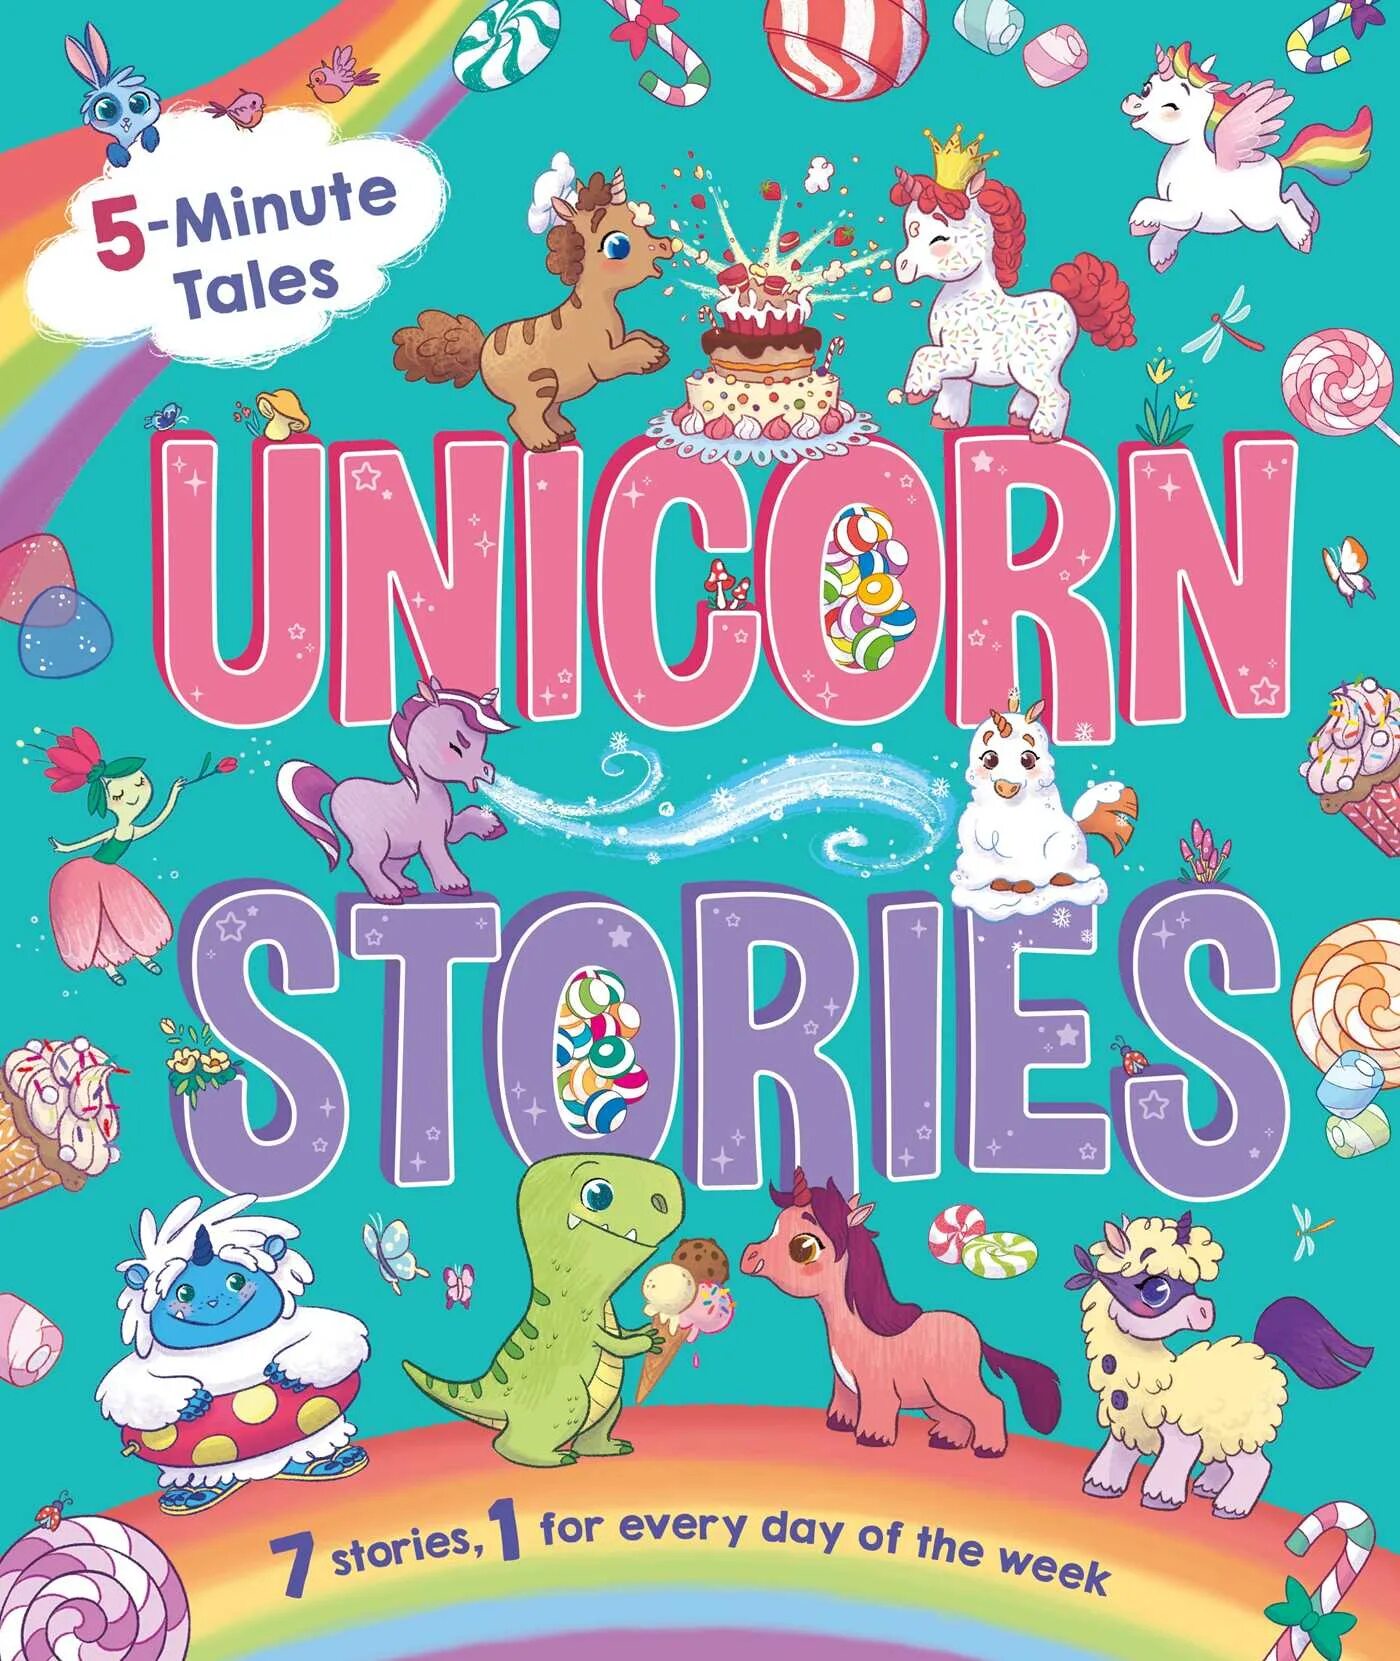 Unicorn book. Unicorn книги. Unicorn book книги. Книга с единорогом на обложке. Stories of Unicorns | Dickins Rosie книга.